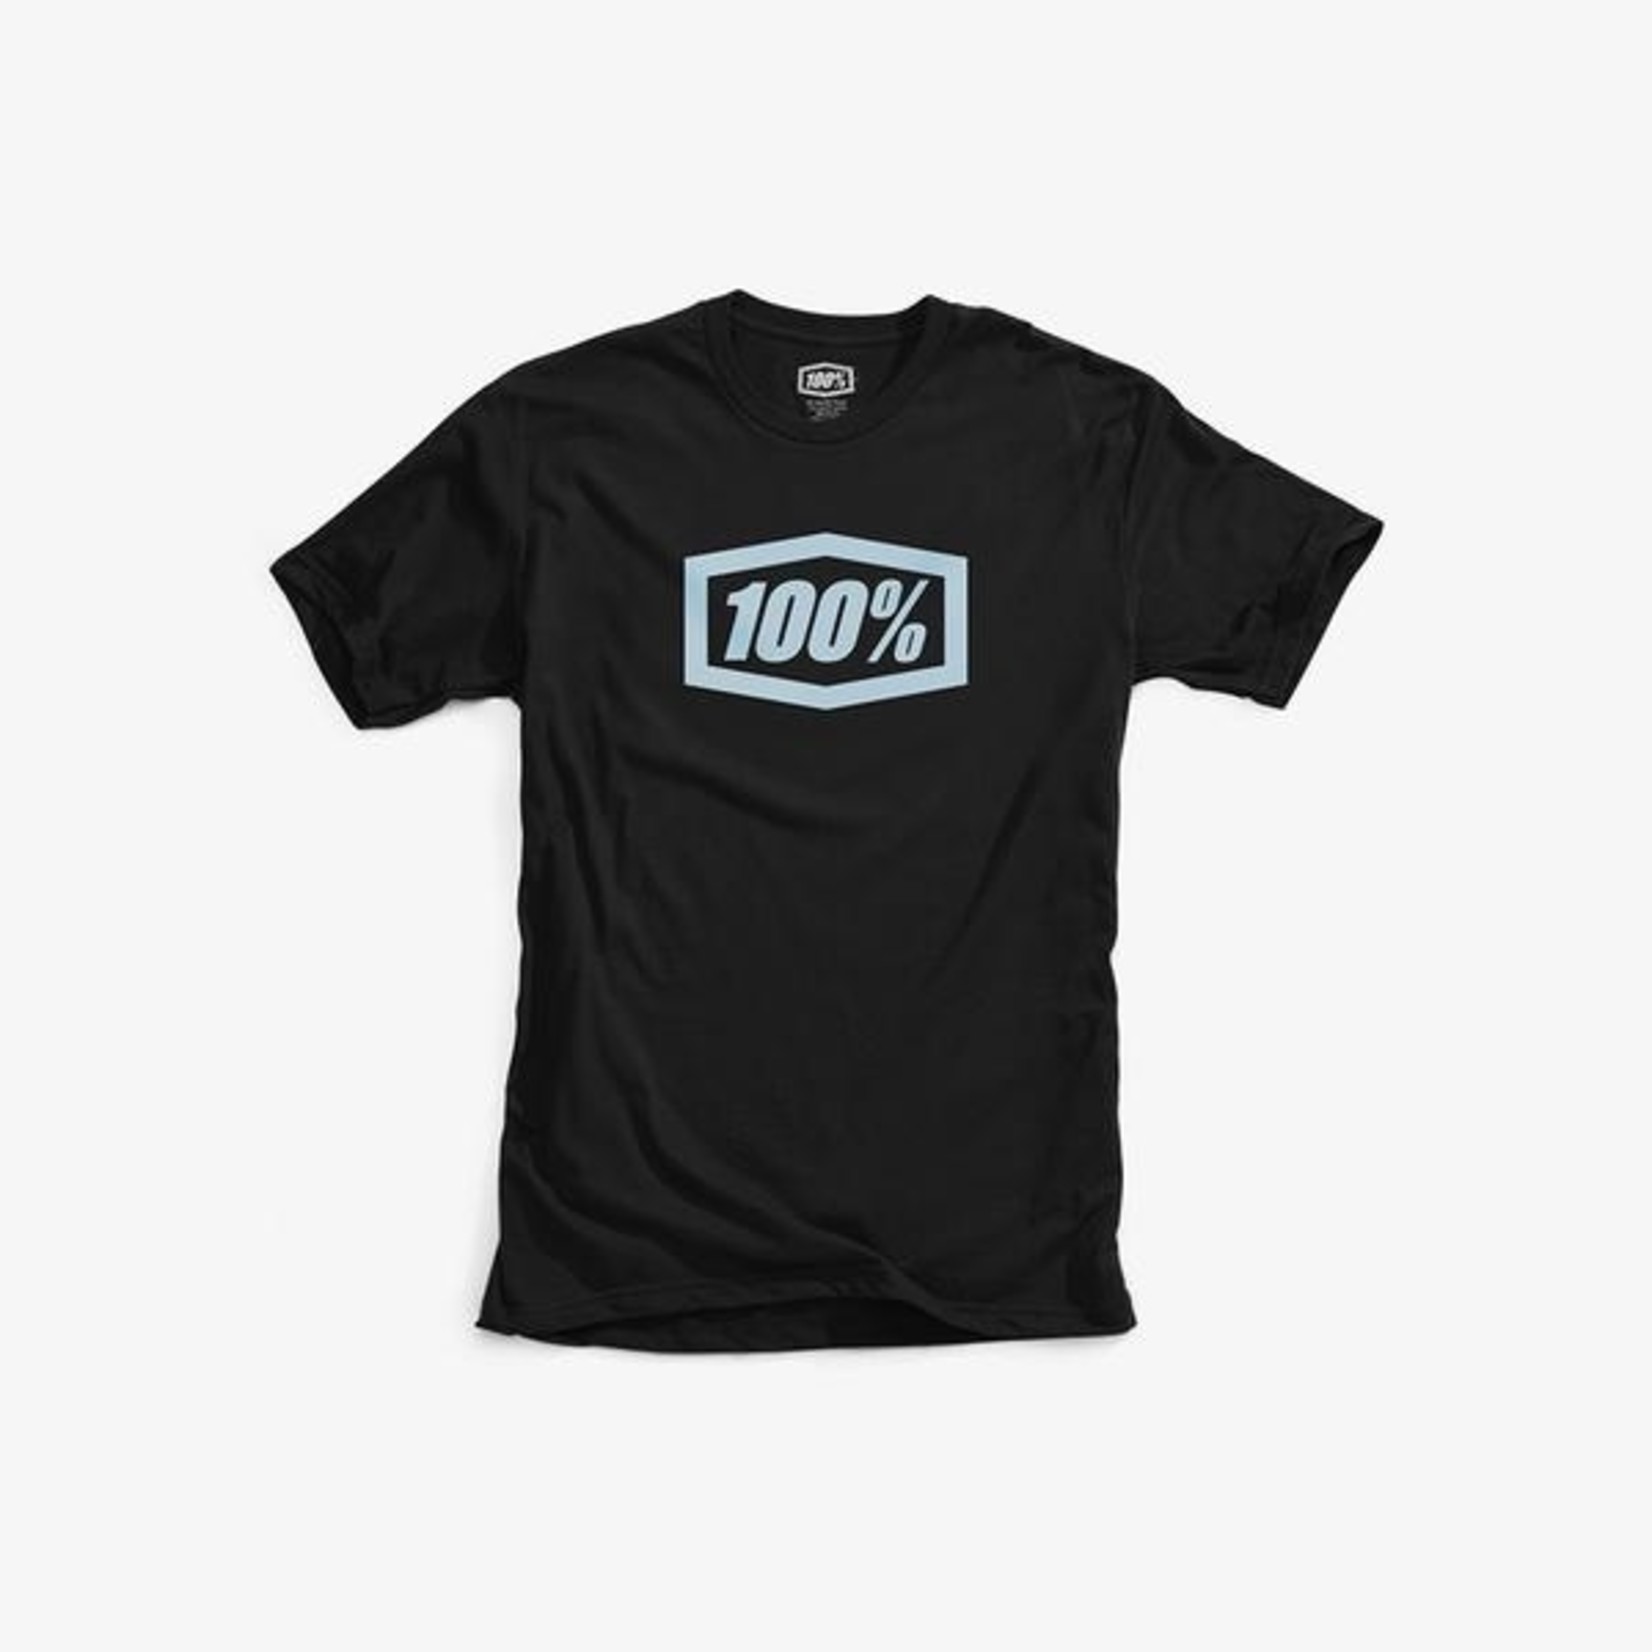 FE sports 100% Essential Tech Tee Shirt - Black